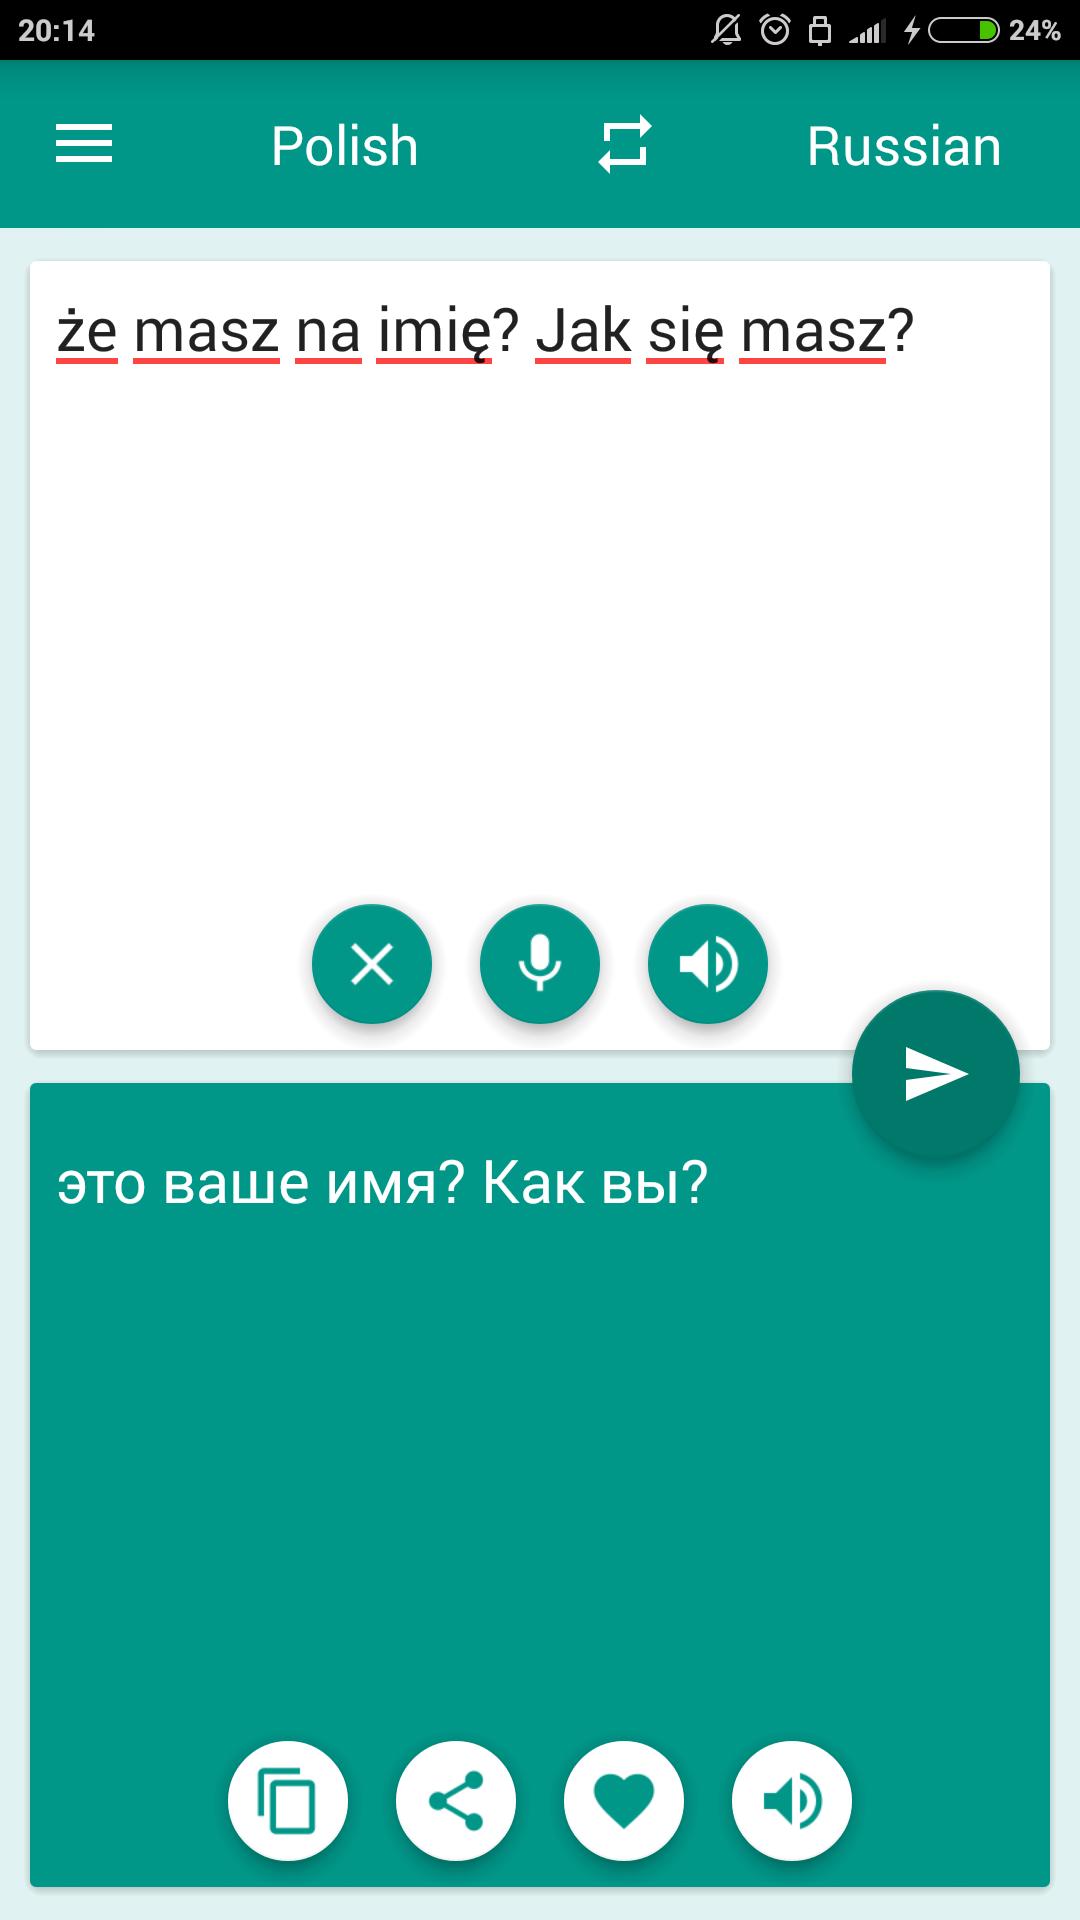 Polsko-rosyjski Tłumacz for Android - APK Download